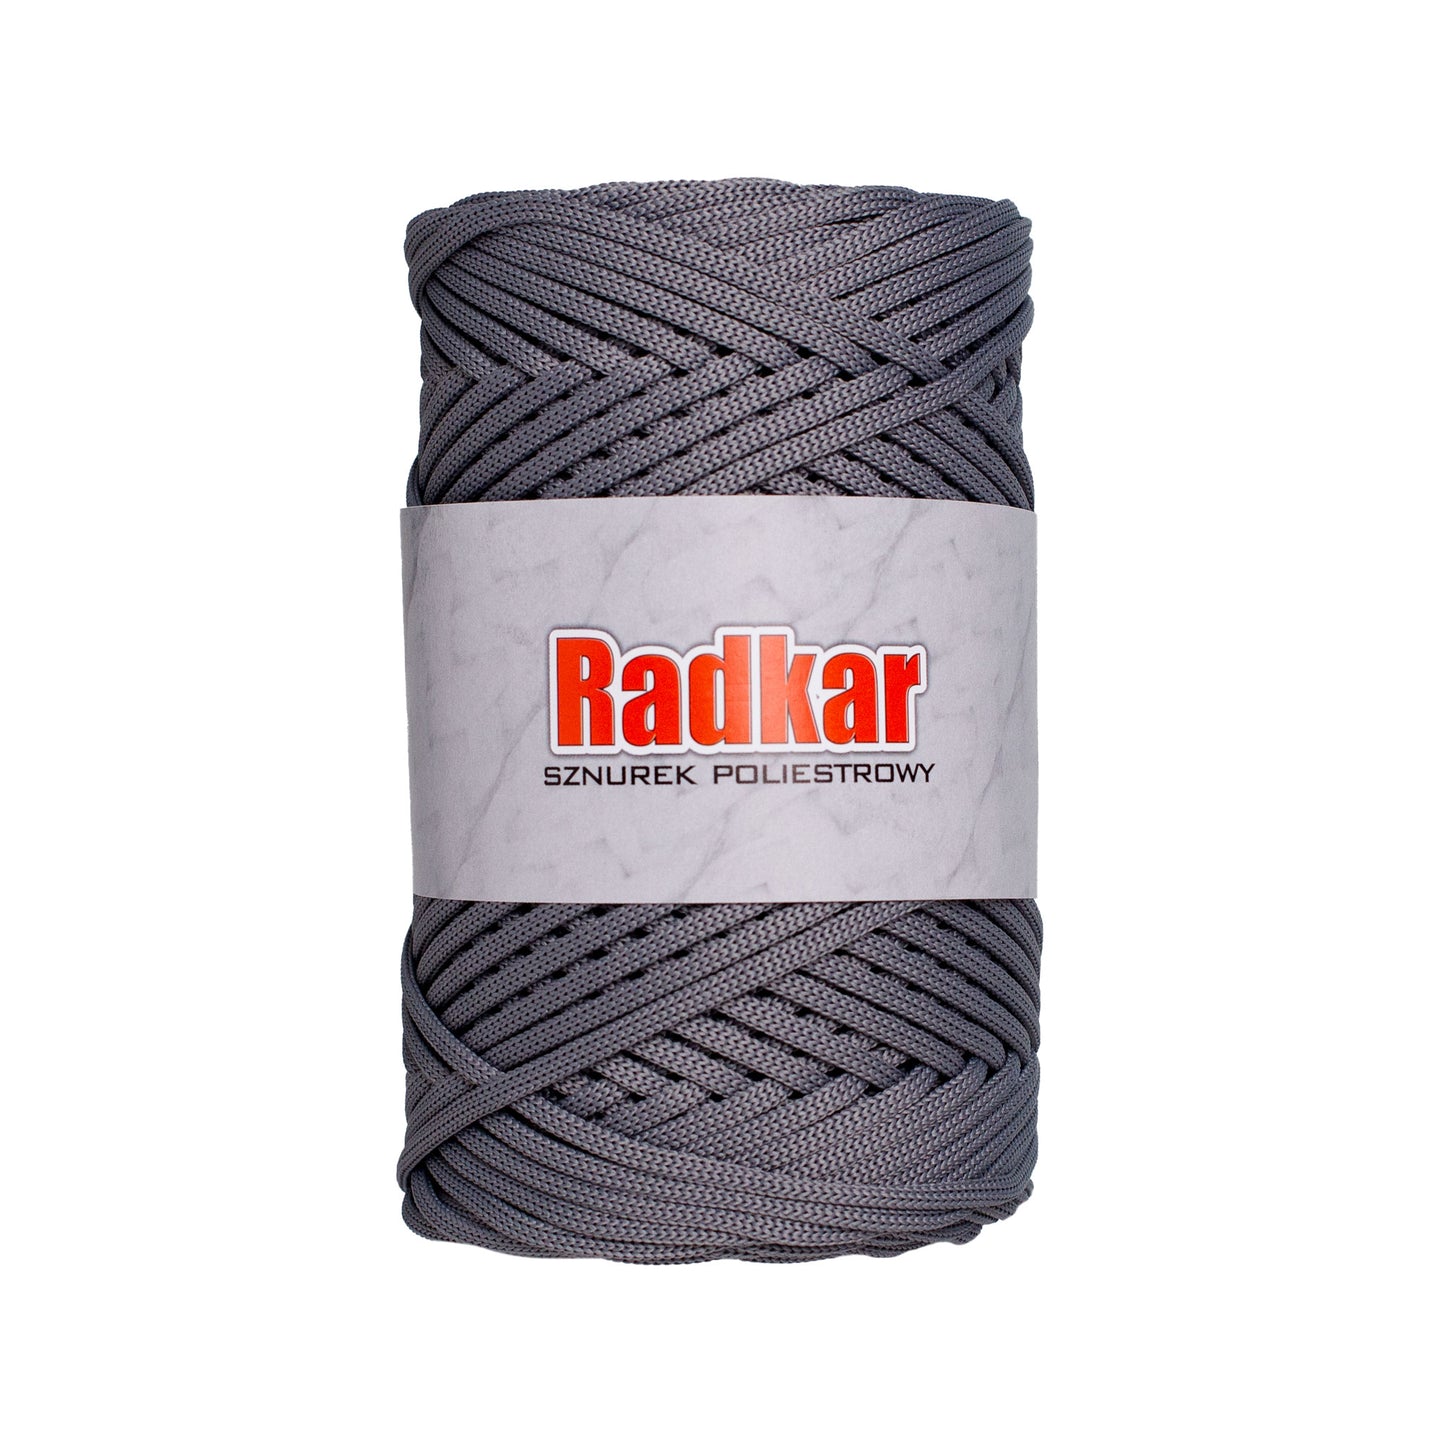 polyester cord 3mm grey radkar handmade craft macrame bag knit crochet